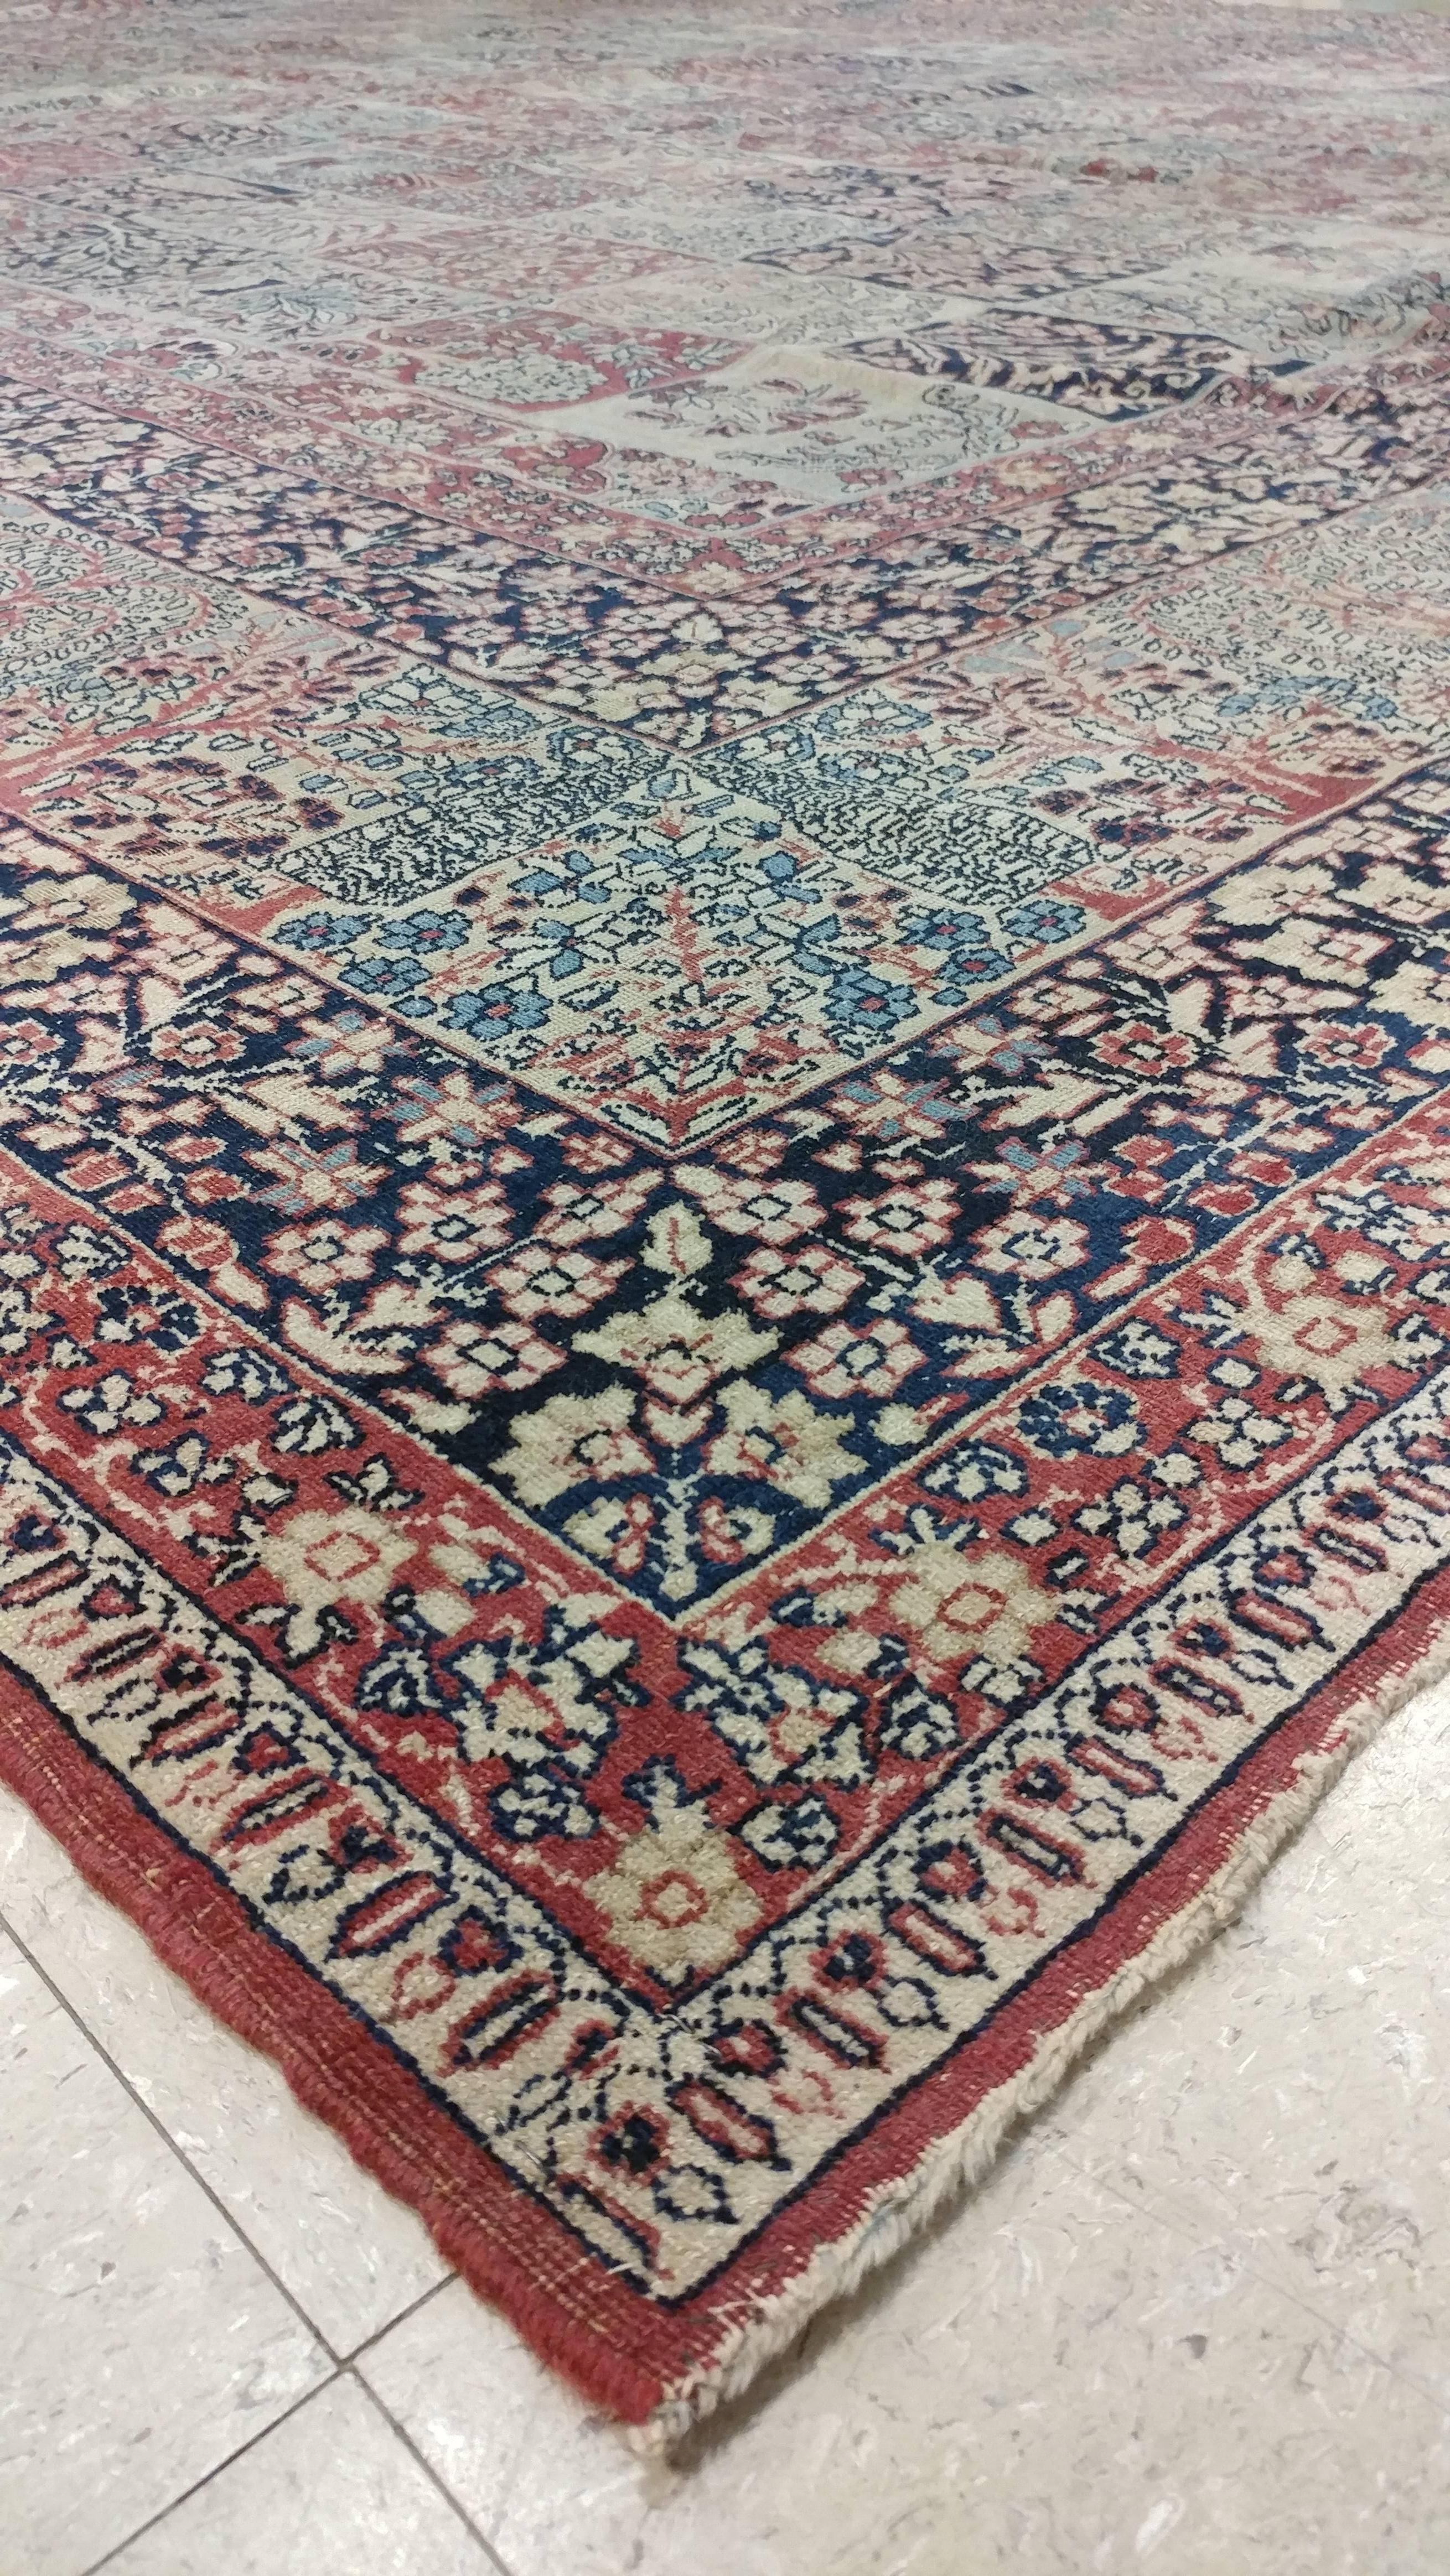 Persian Antique Lavar Kerman Carpet, Handmade Wool Carpet, Multi-Color, Ivory, Red Wine For Sale